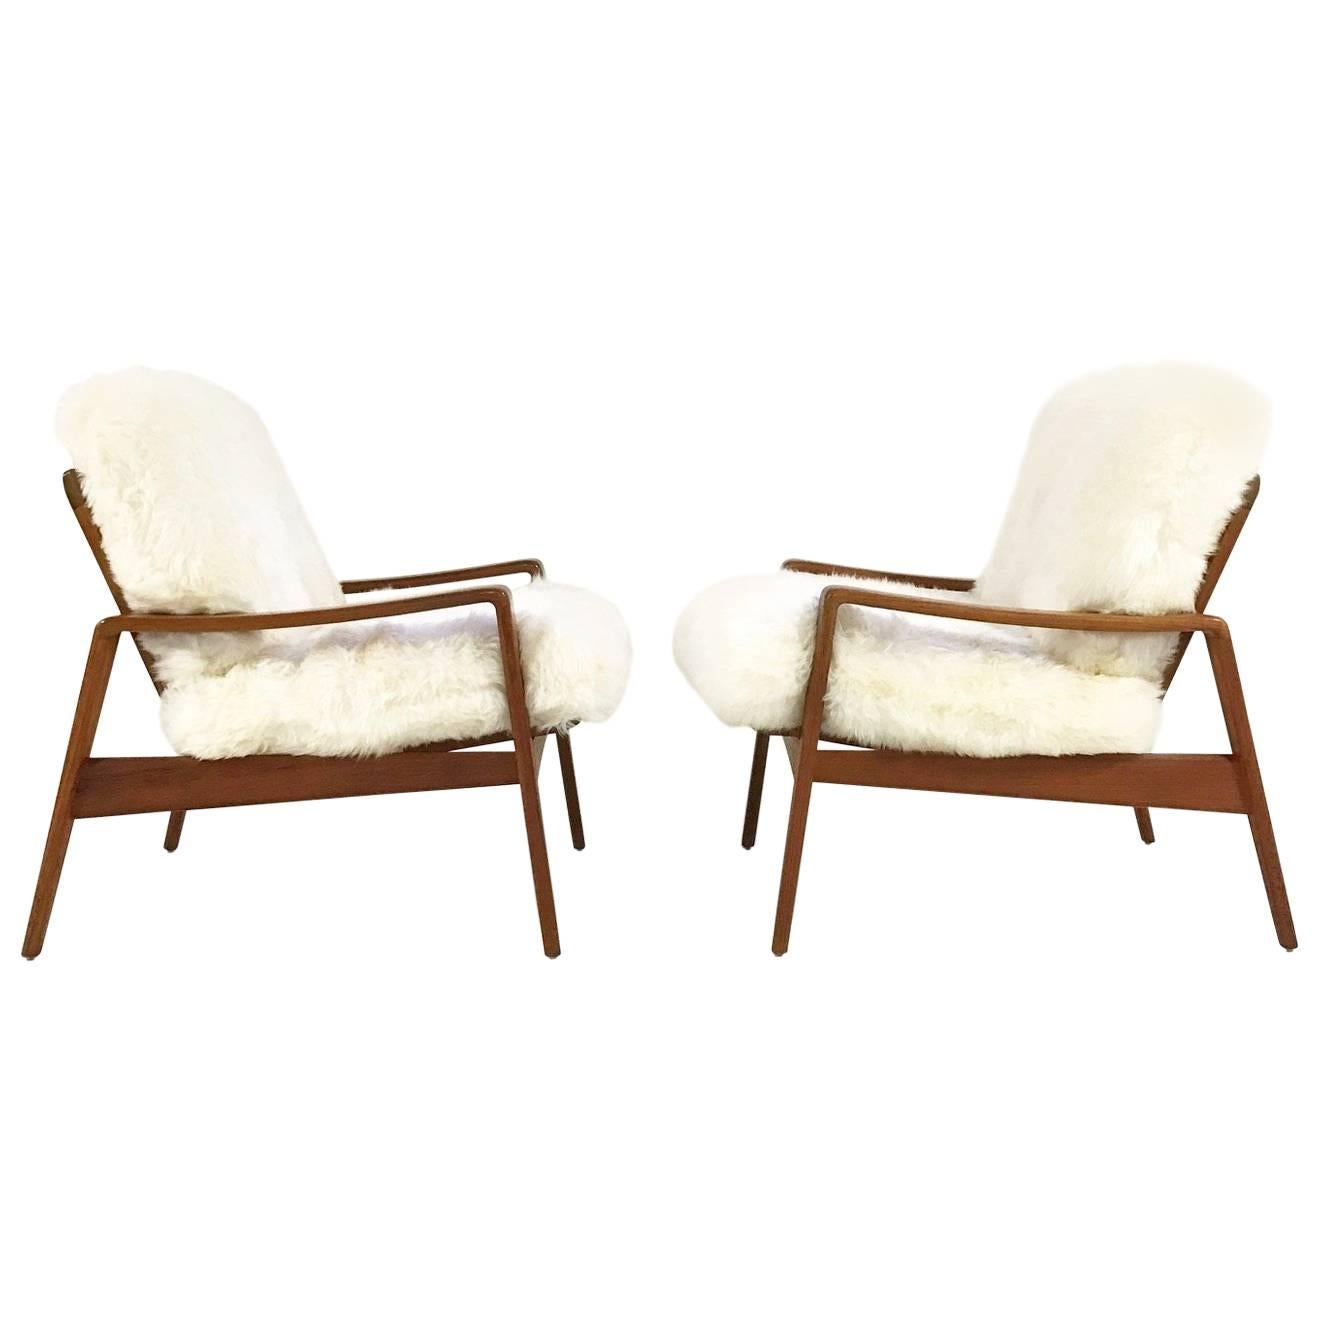 Pair of Danish Lounge Chairs by Arne Wahl Iversen for Komfort in Sheepskin